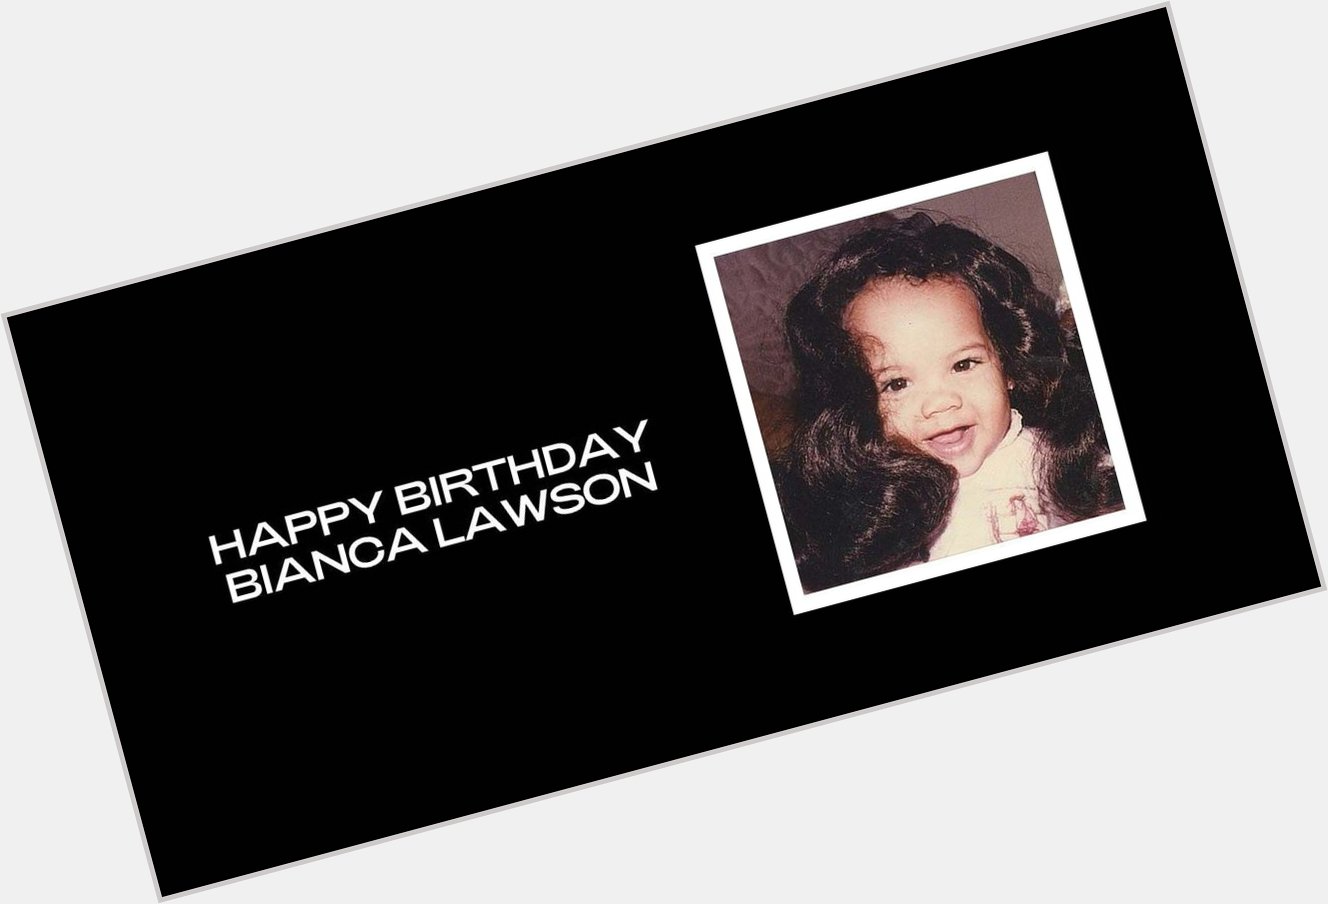  Happy Birthday Bianca Lawson  